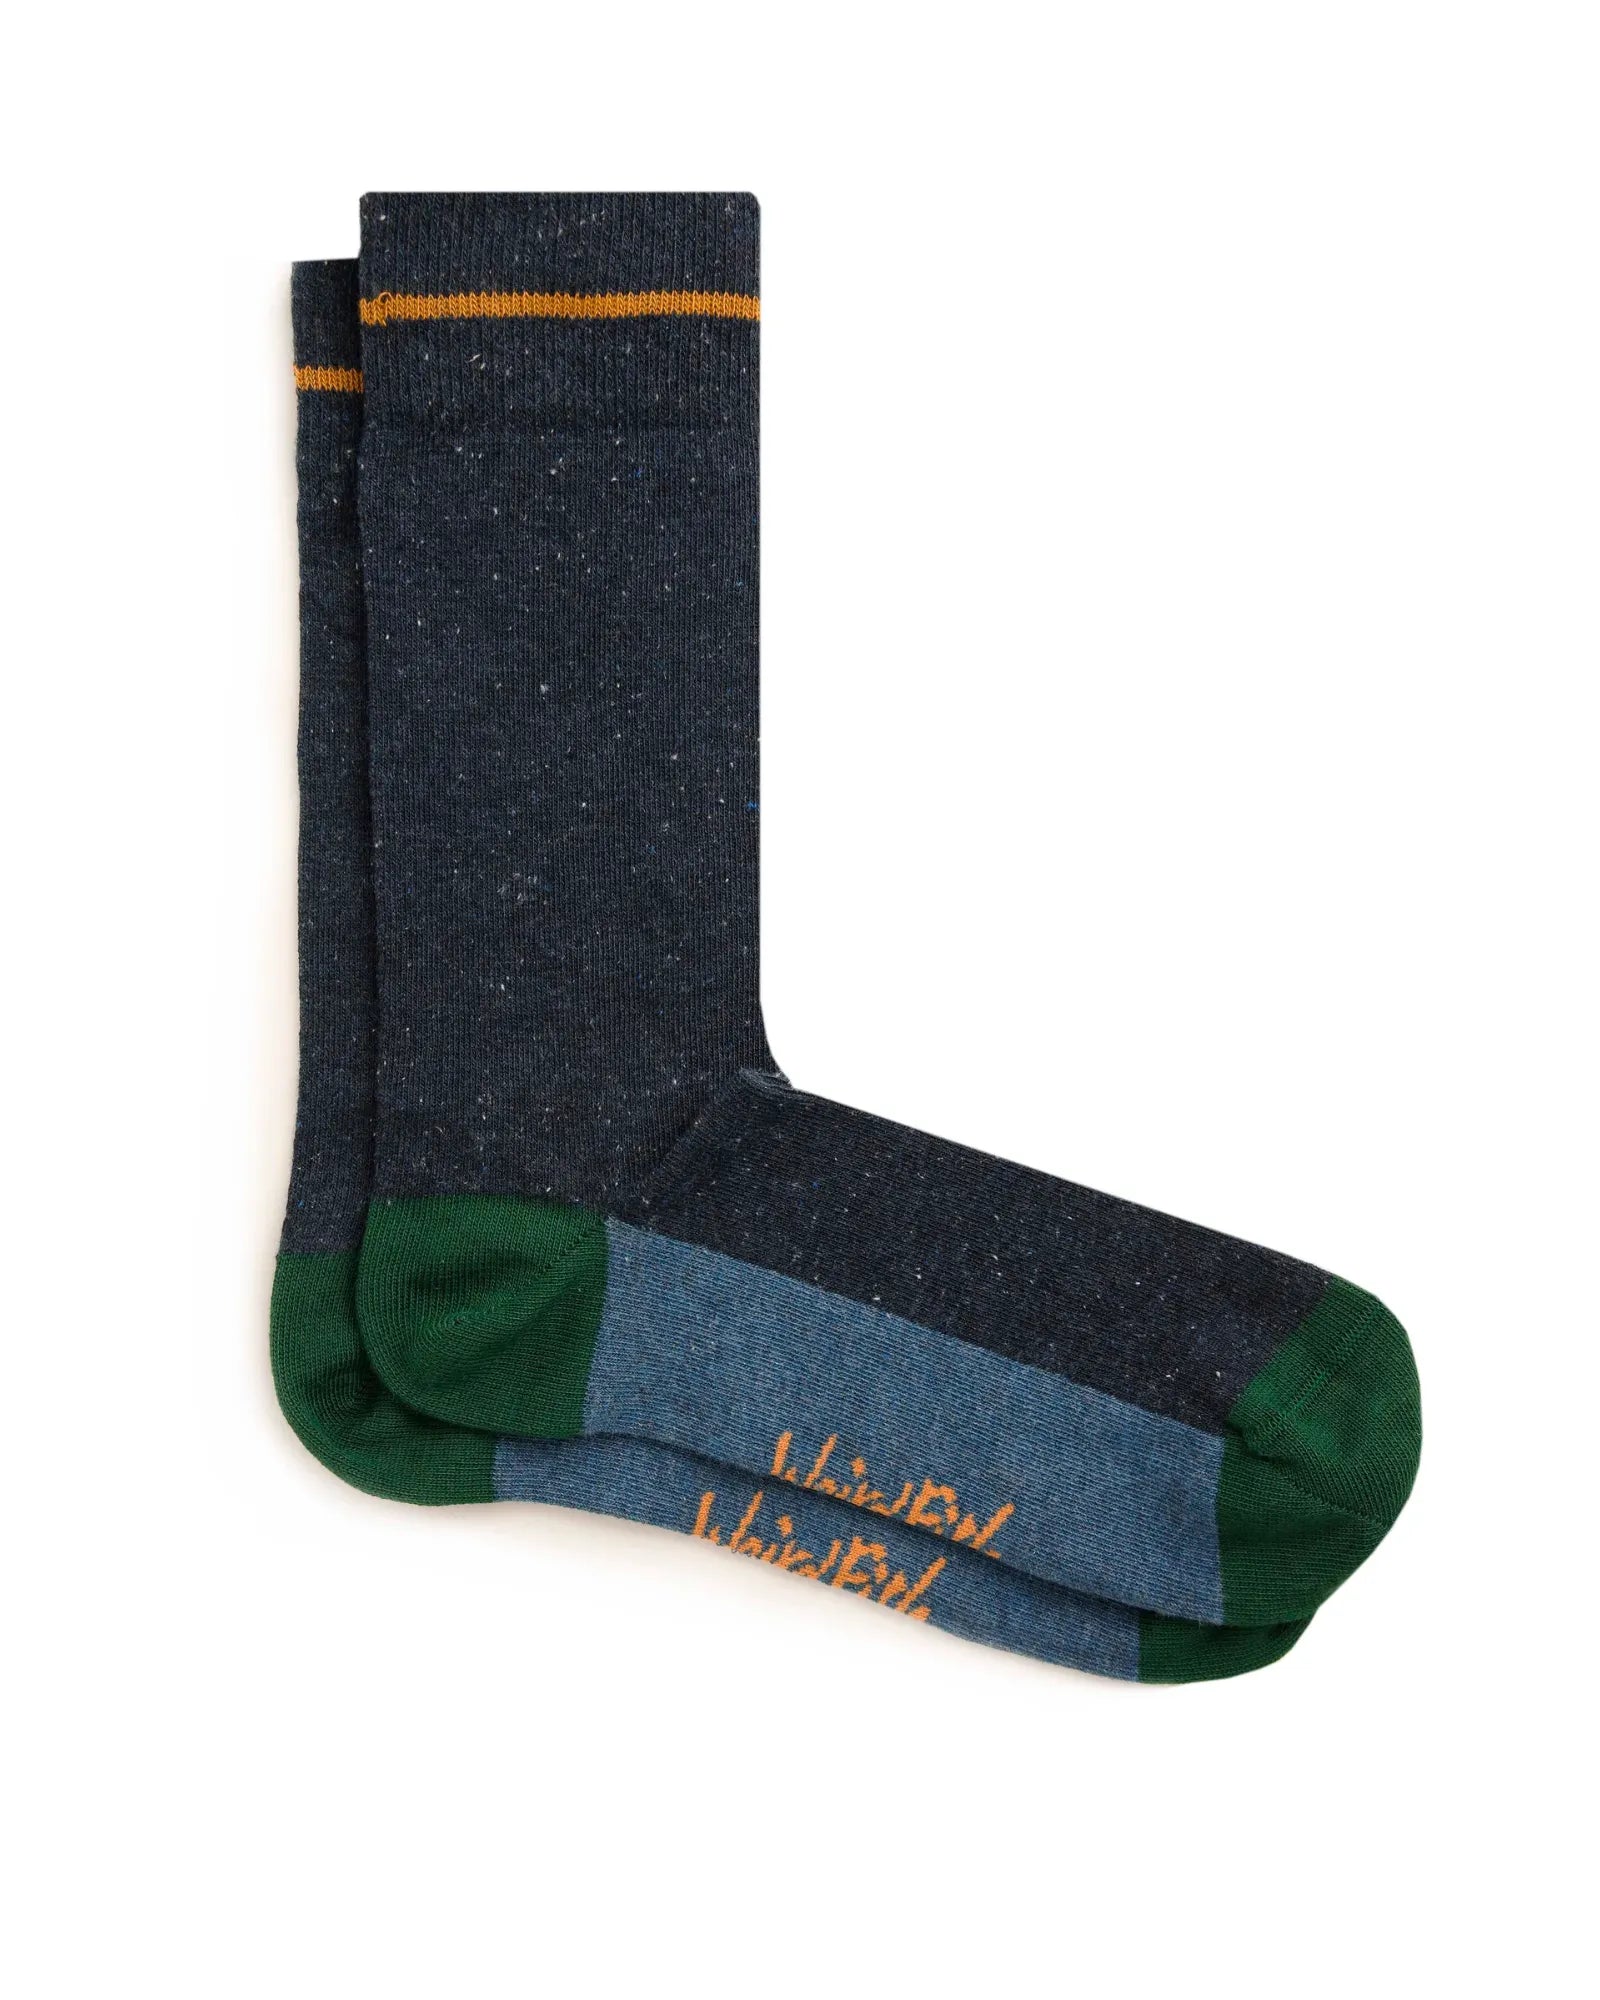 Wyatt Eco Stripe Socks Multi Pack - Denim